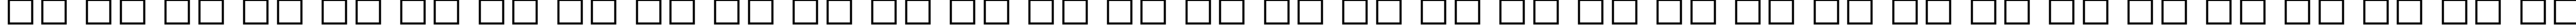 Пример написания русского алфавита шрифтом Bodoni MT Black